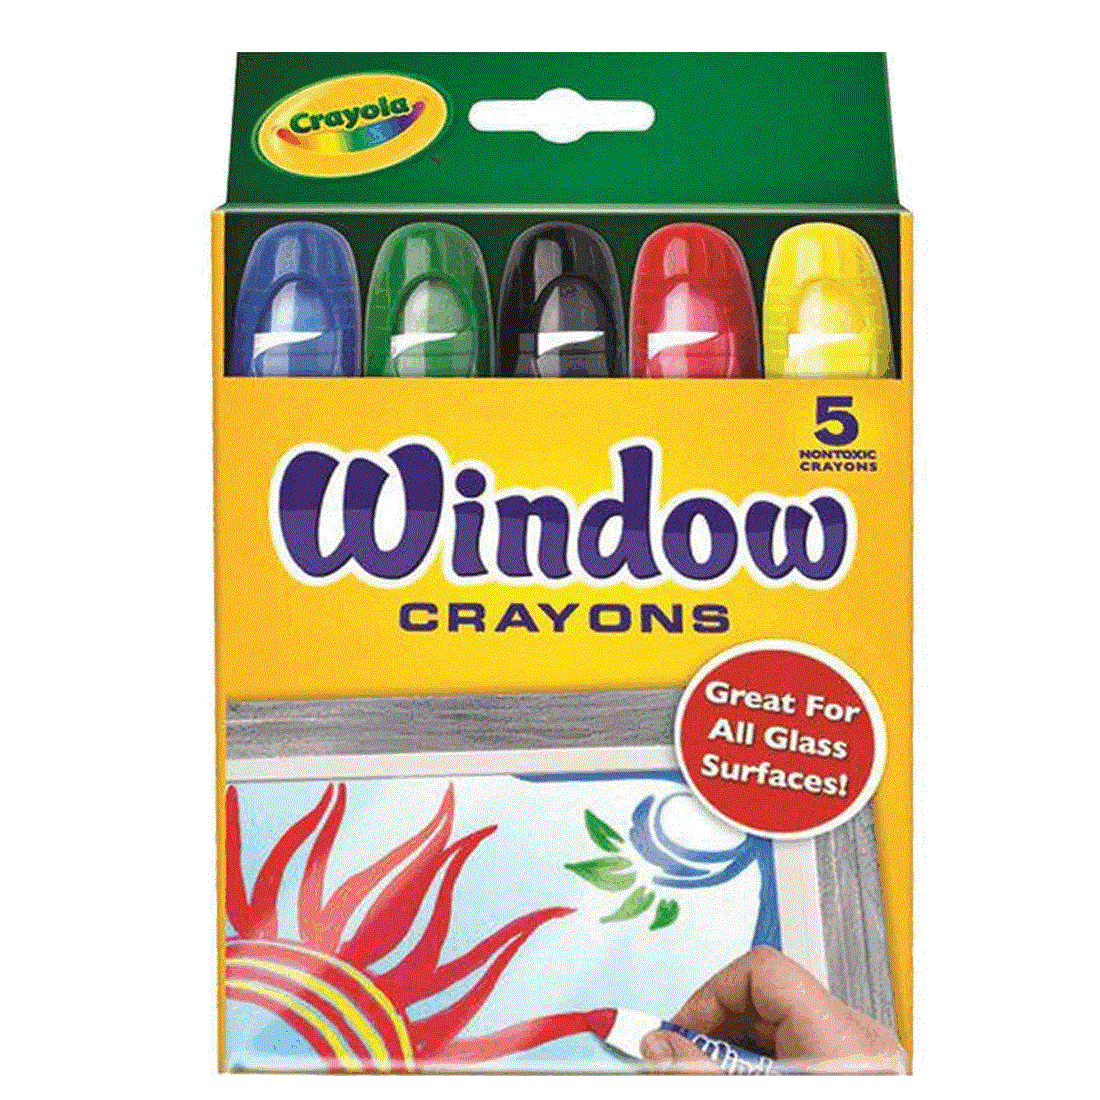 Crayola 5 Window Crayons